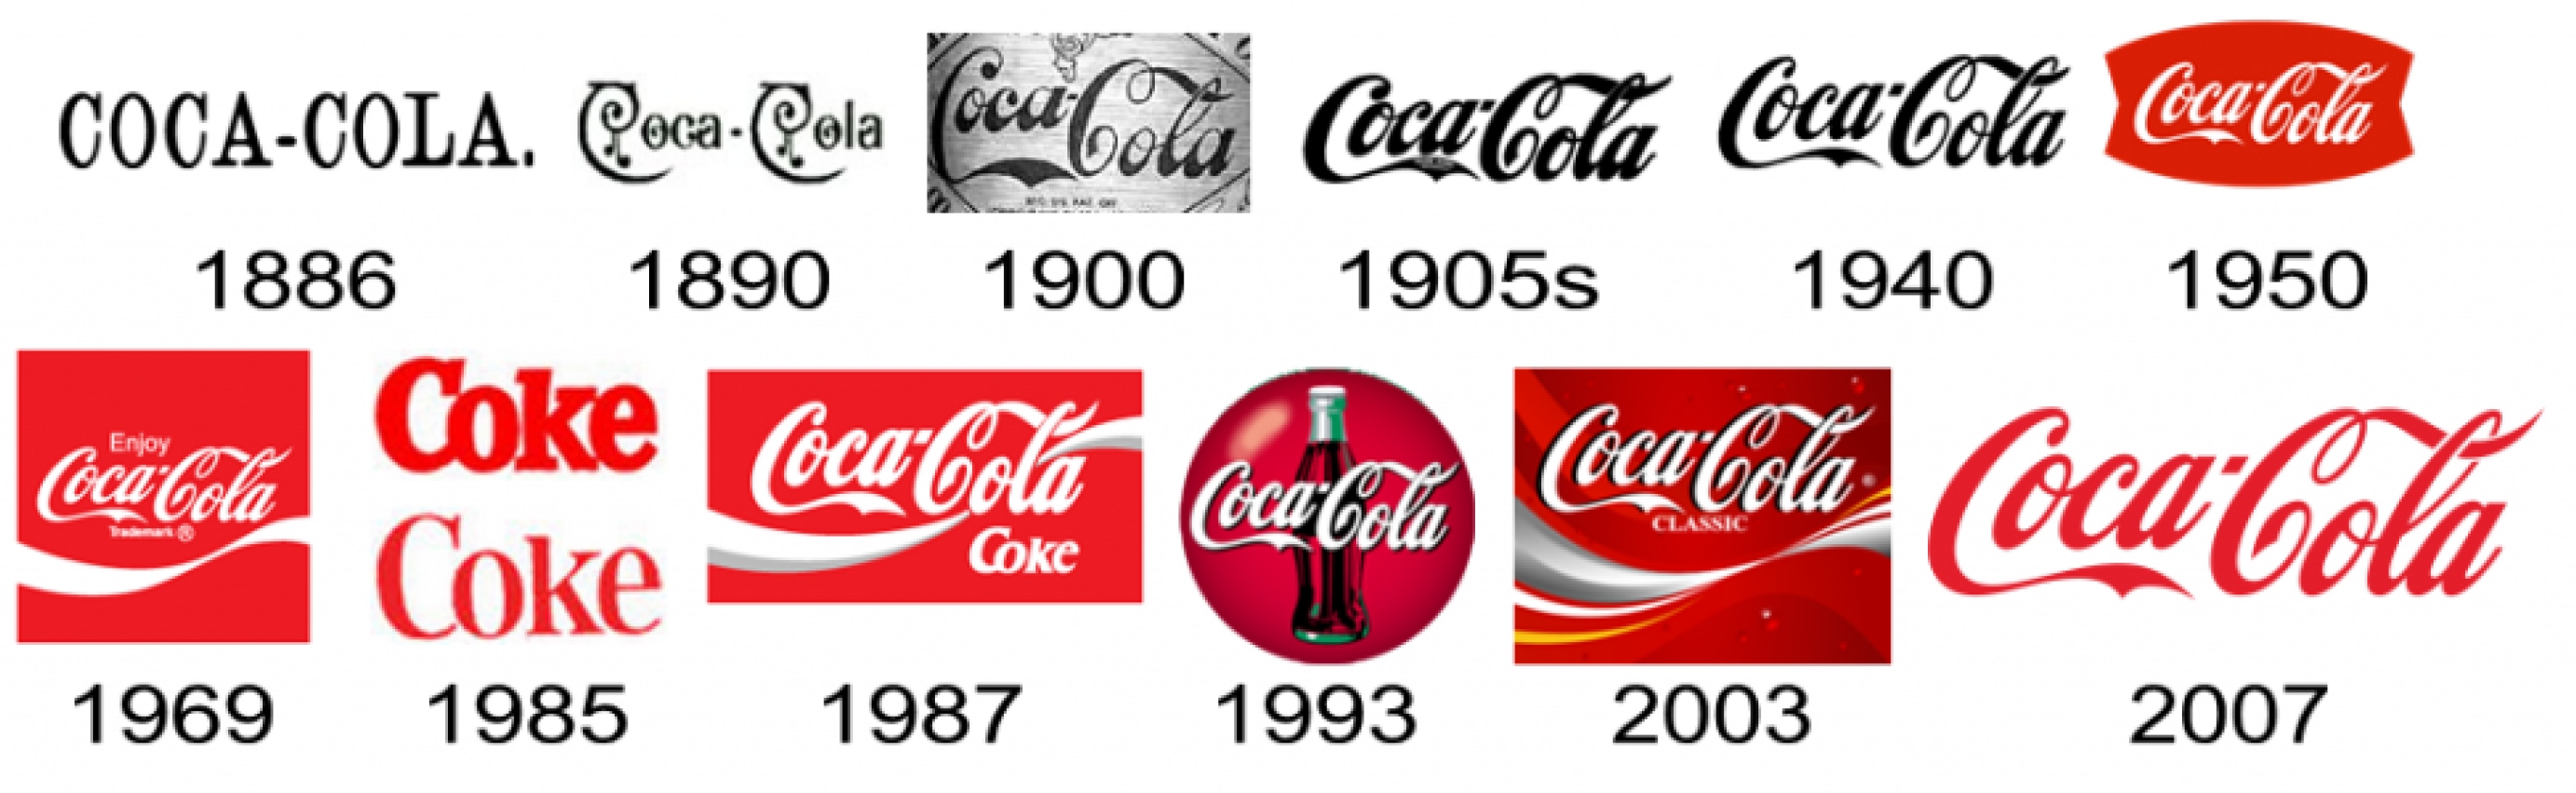 Coca-Cola logo evolution